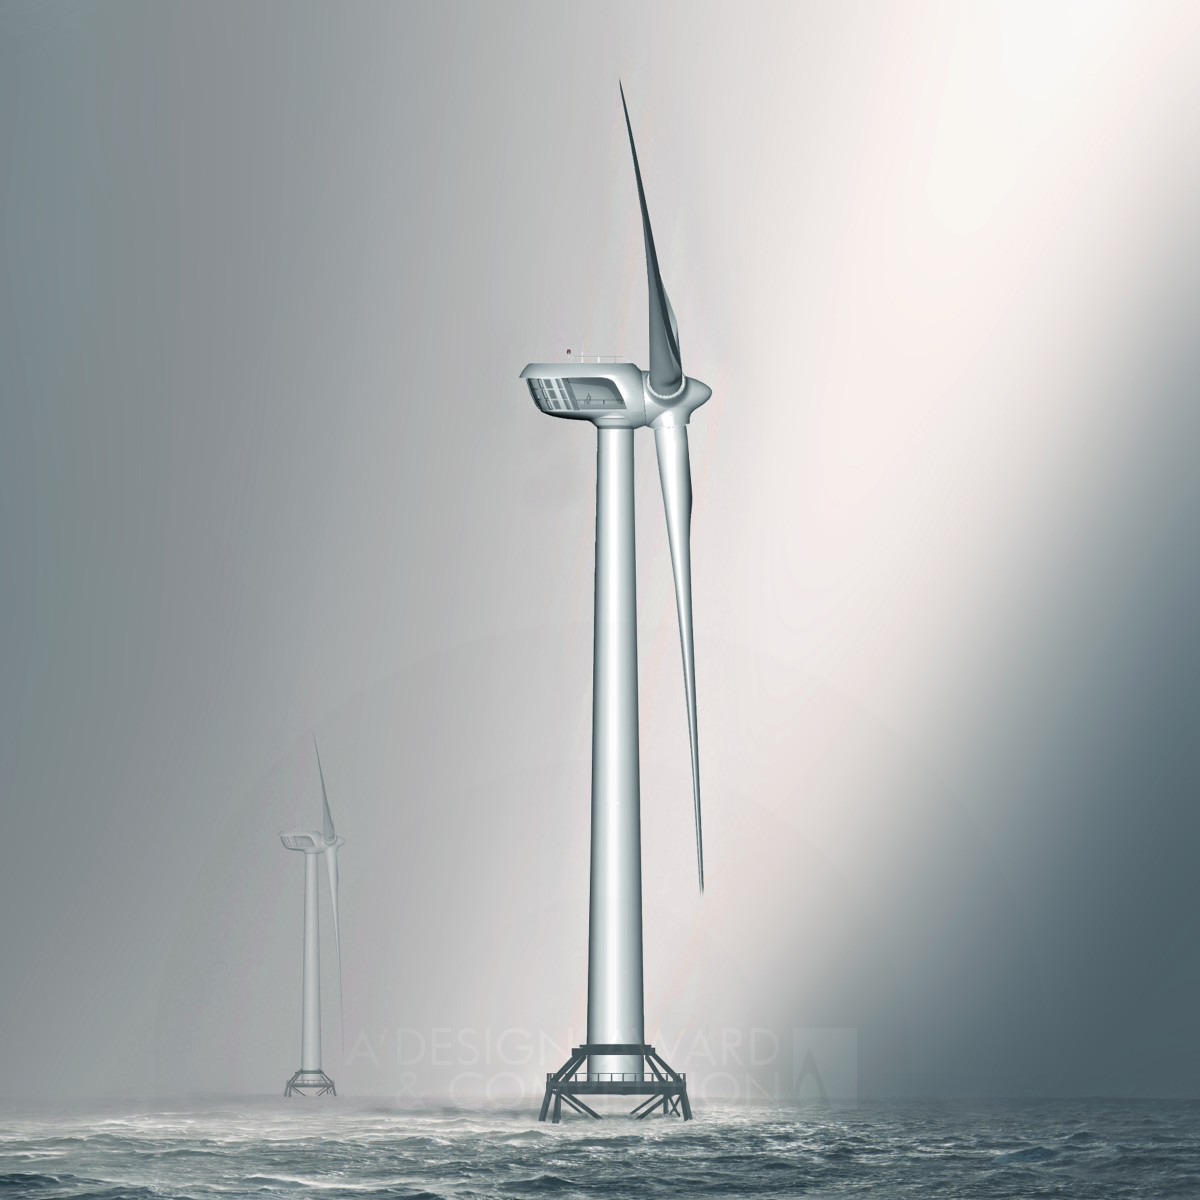 Travis Baldwin 10MW Offshore Wind Turbine